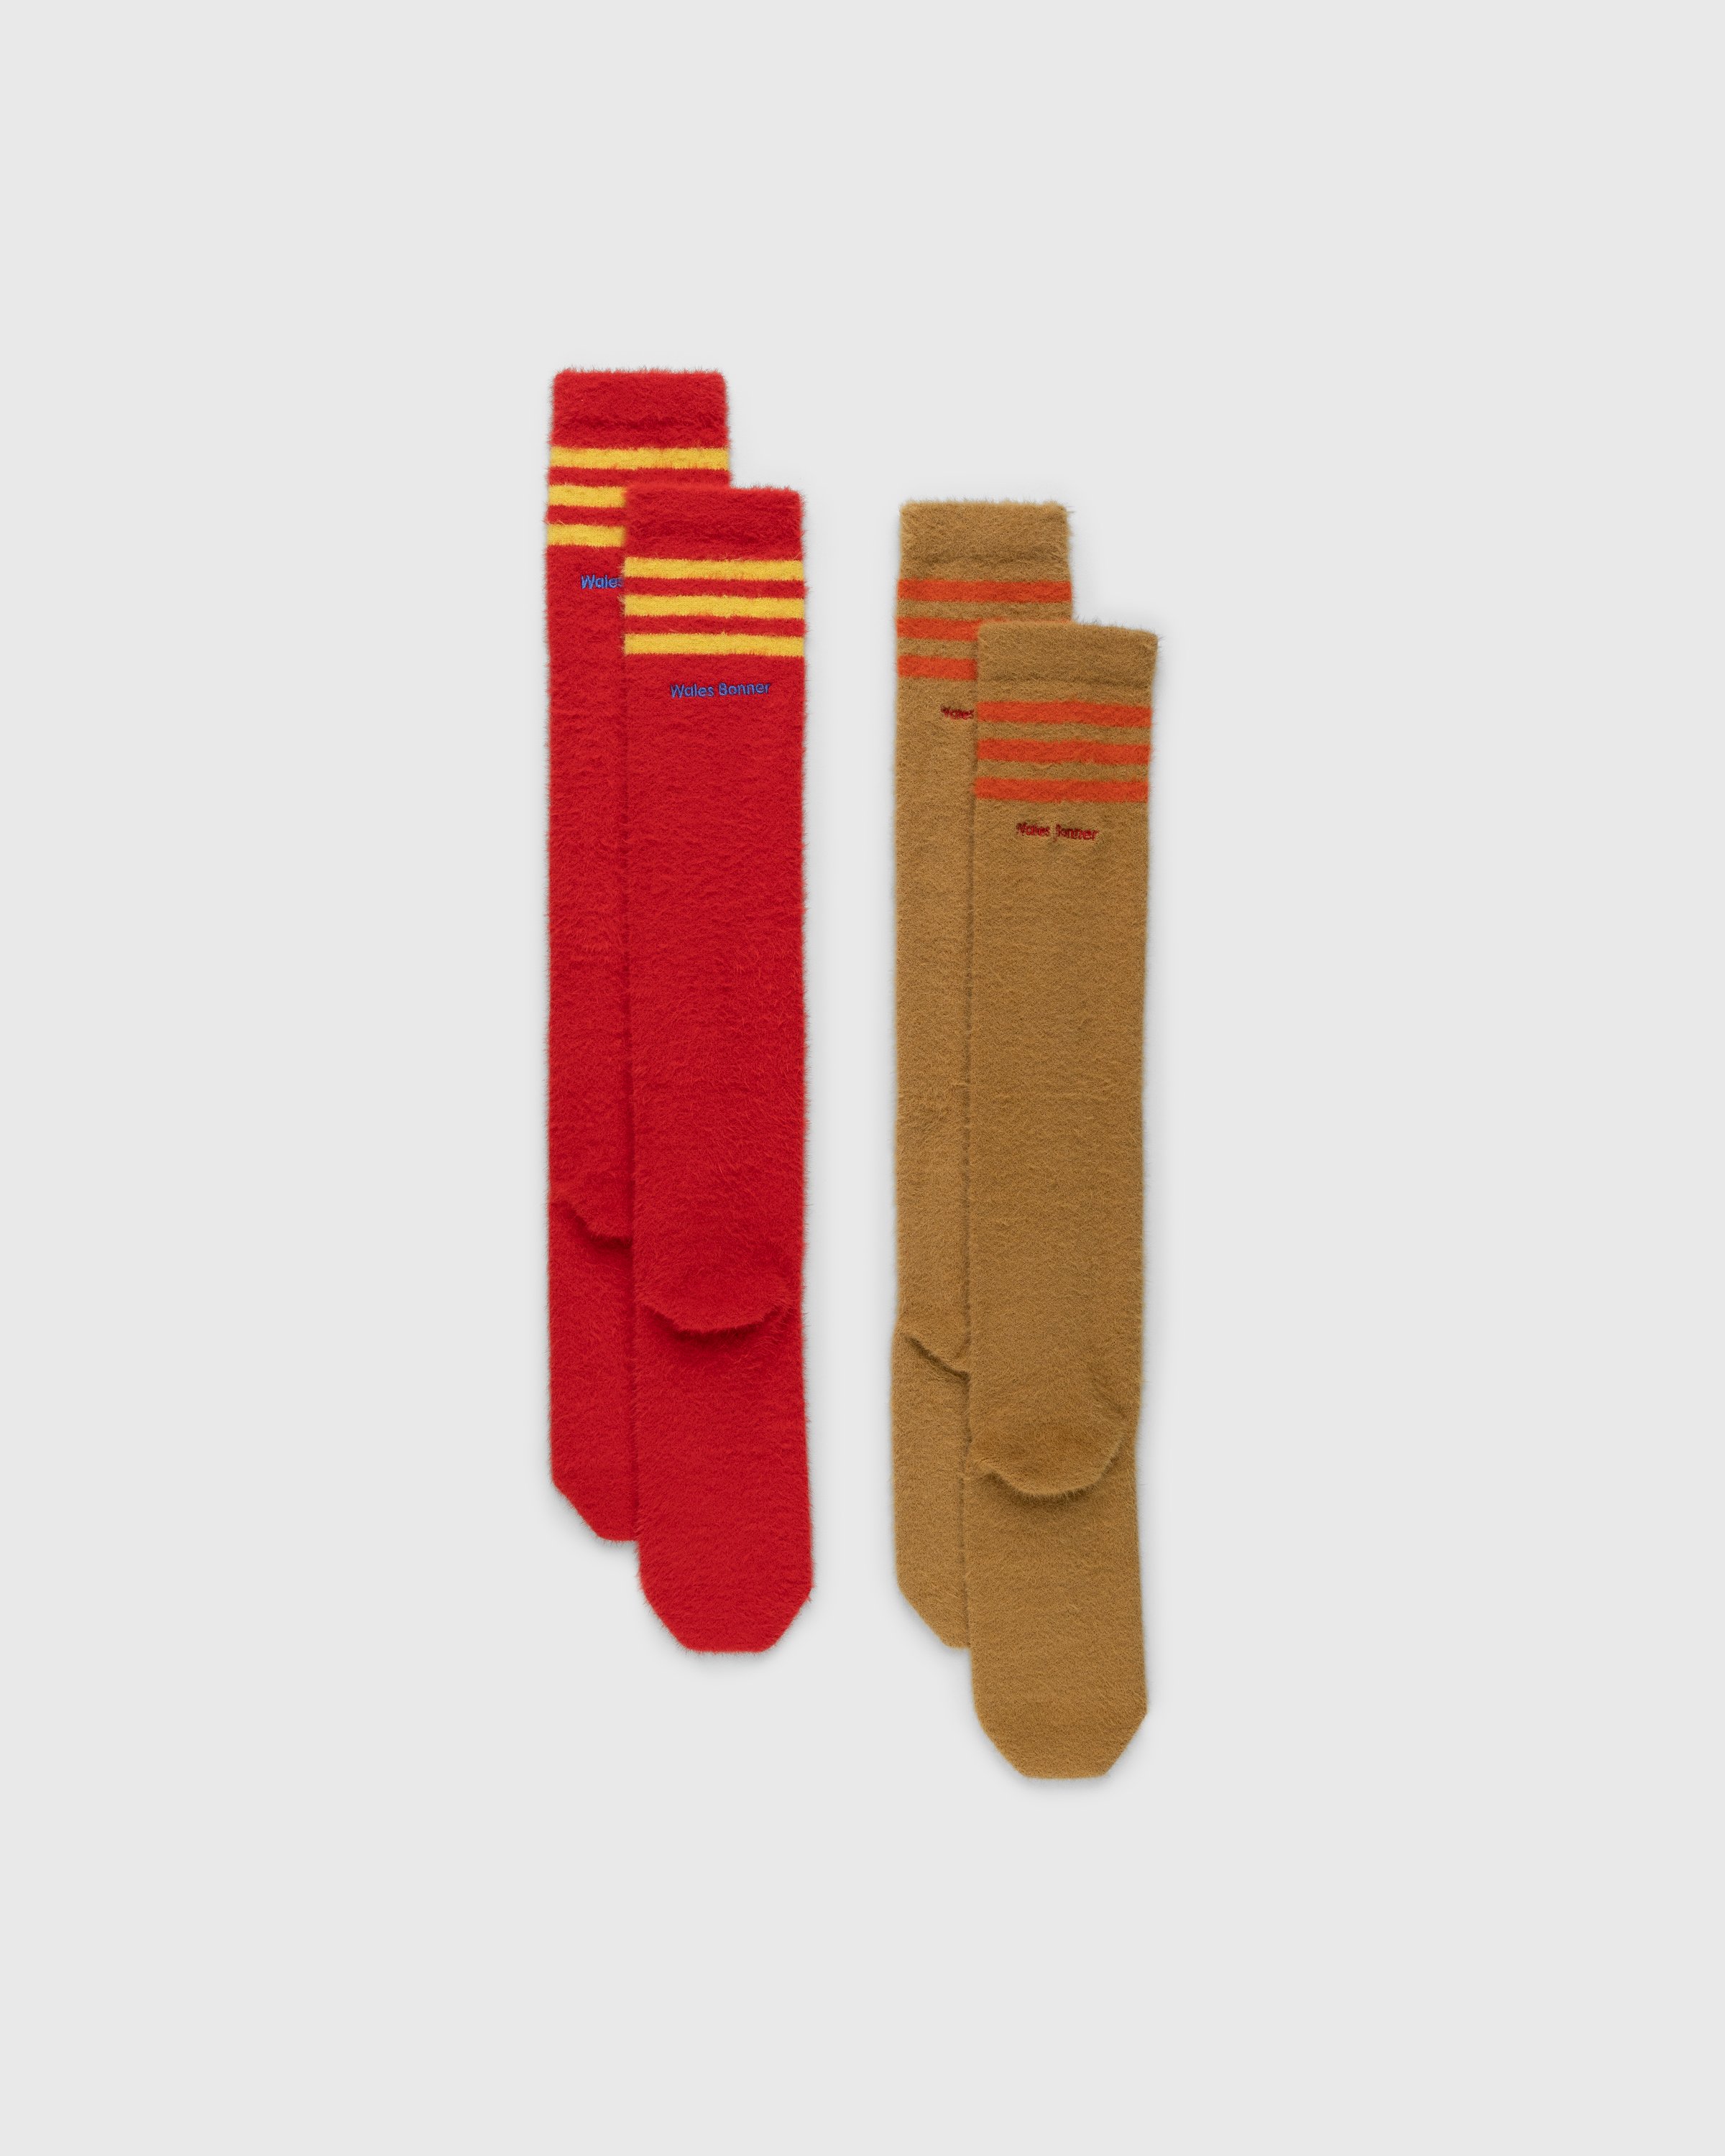 Adidas x Wales Bonner - WB Socks Scarlet/Mesa - Accessories - Yellow - Image 1